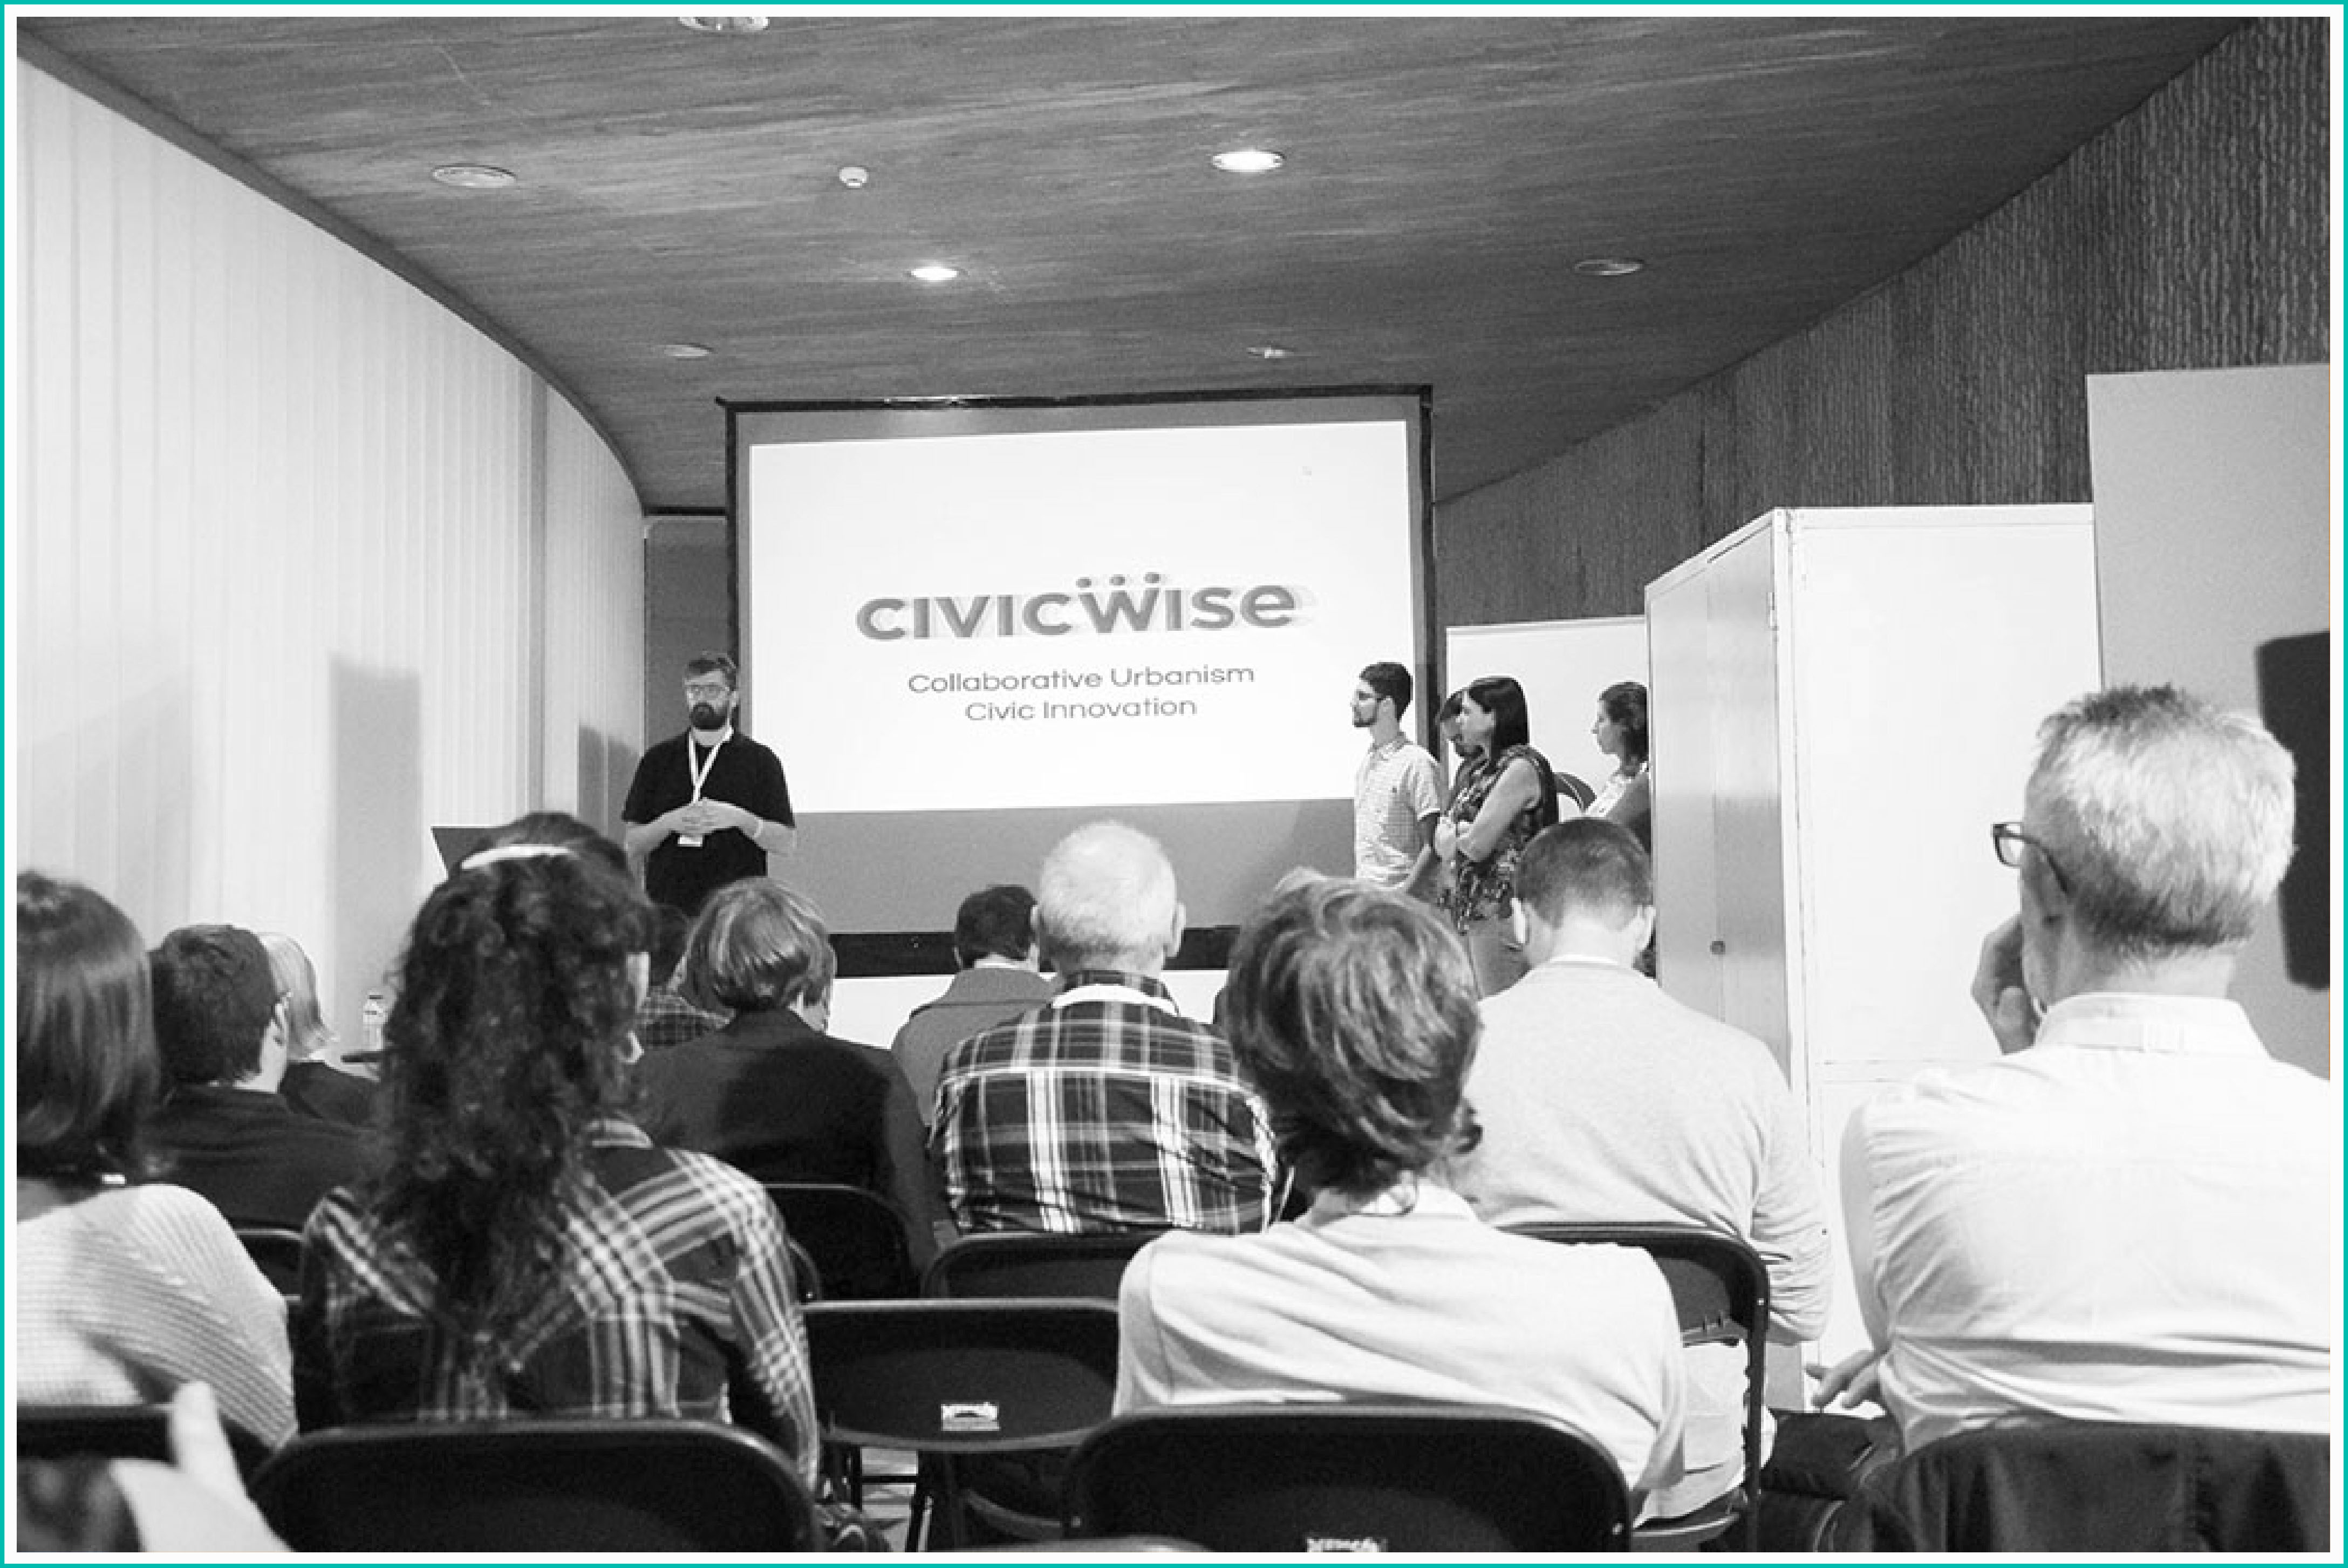 presentacion-civicwise-canarias-en-tenerife-colaborativa_2